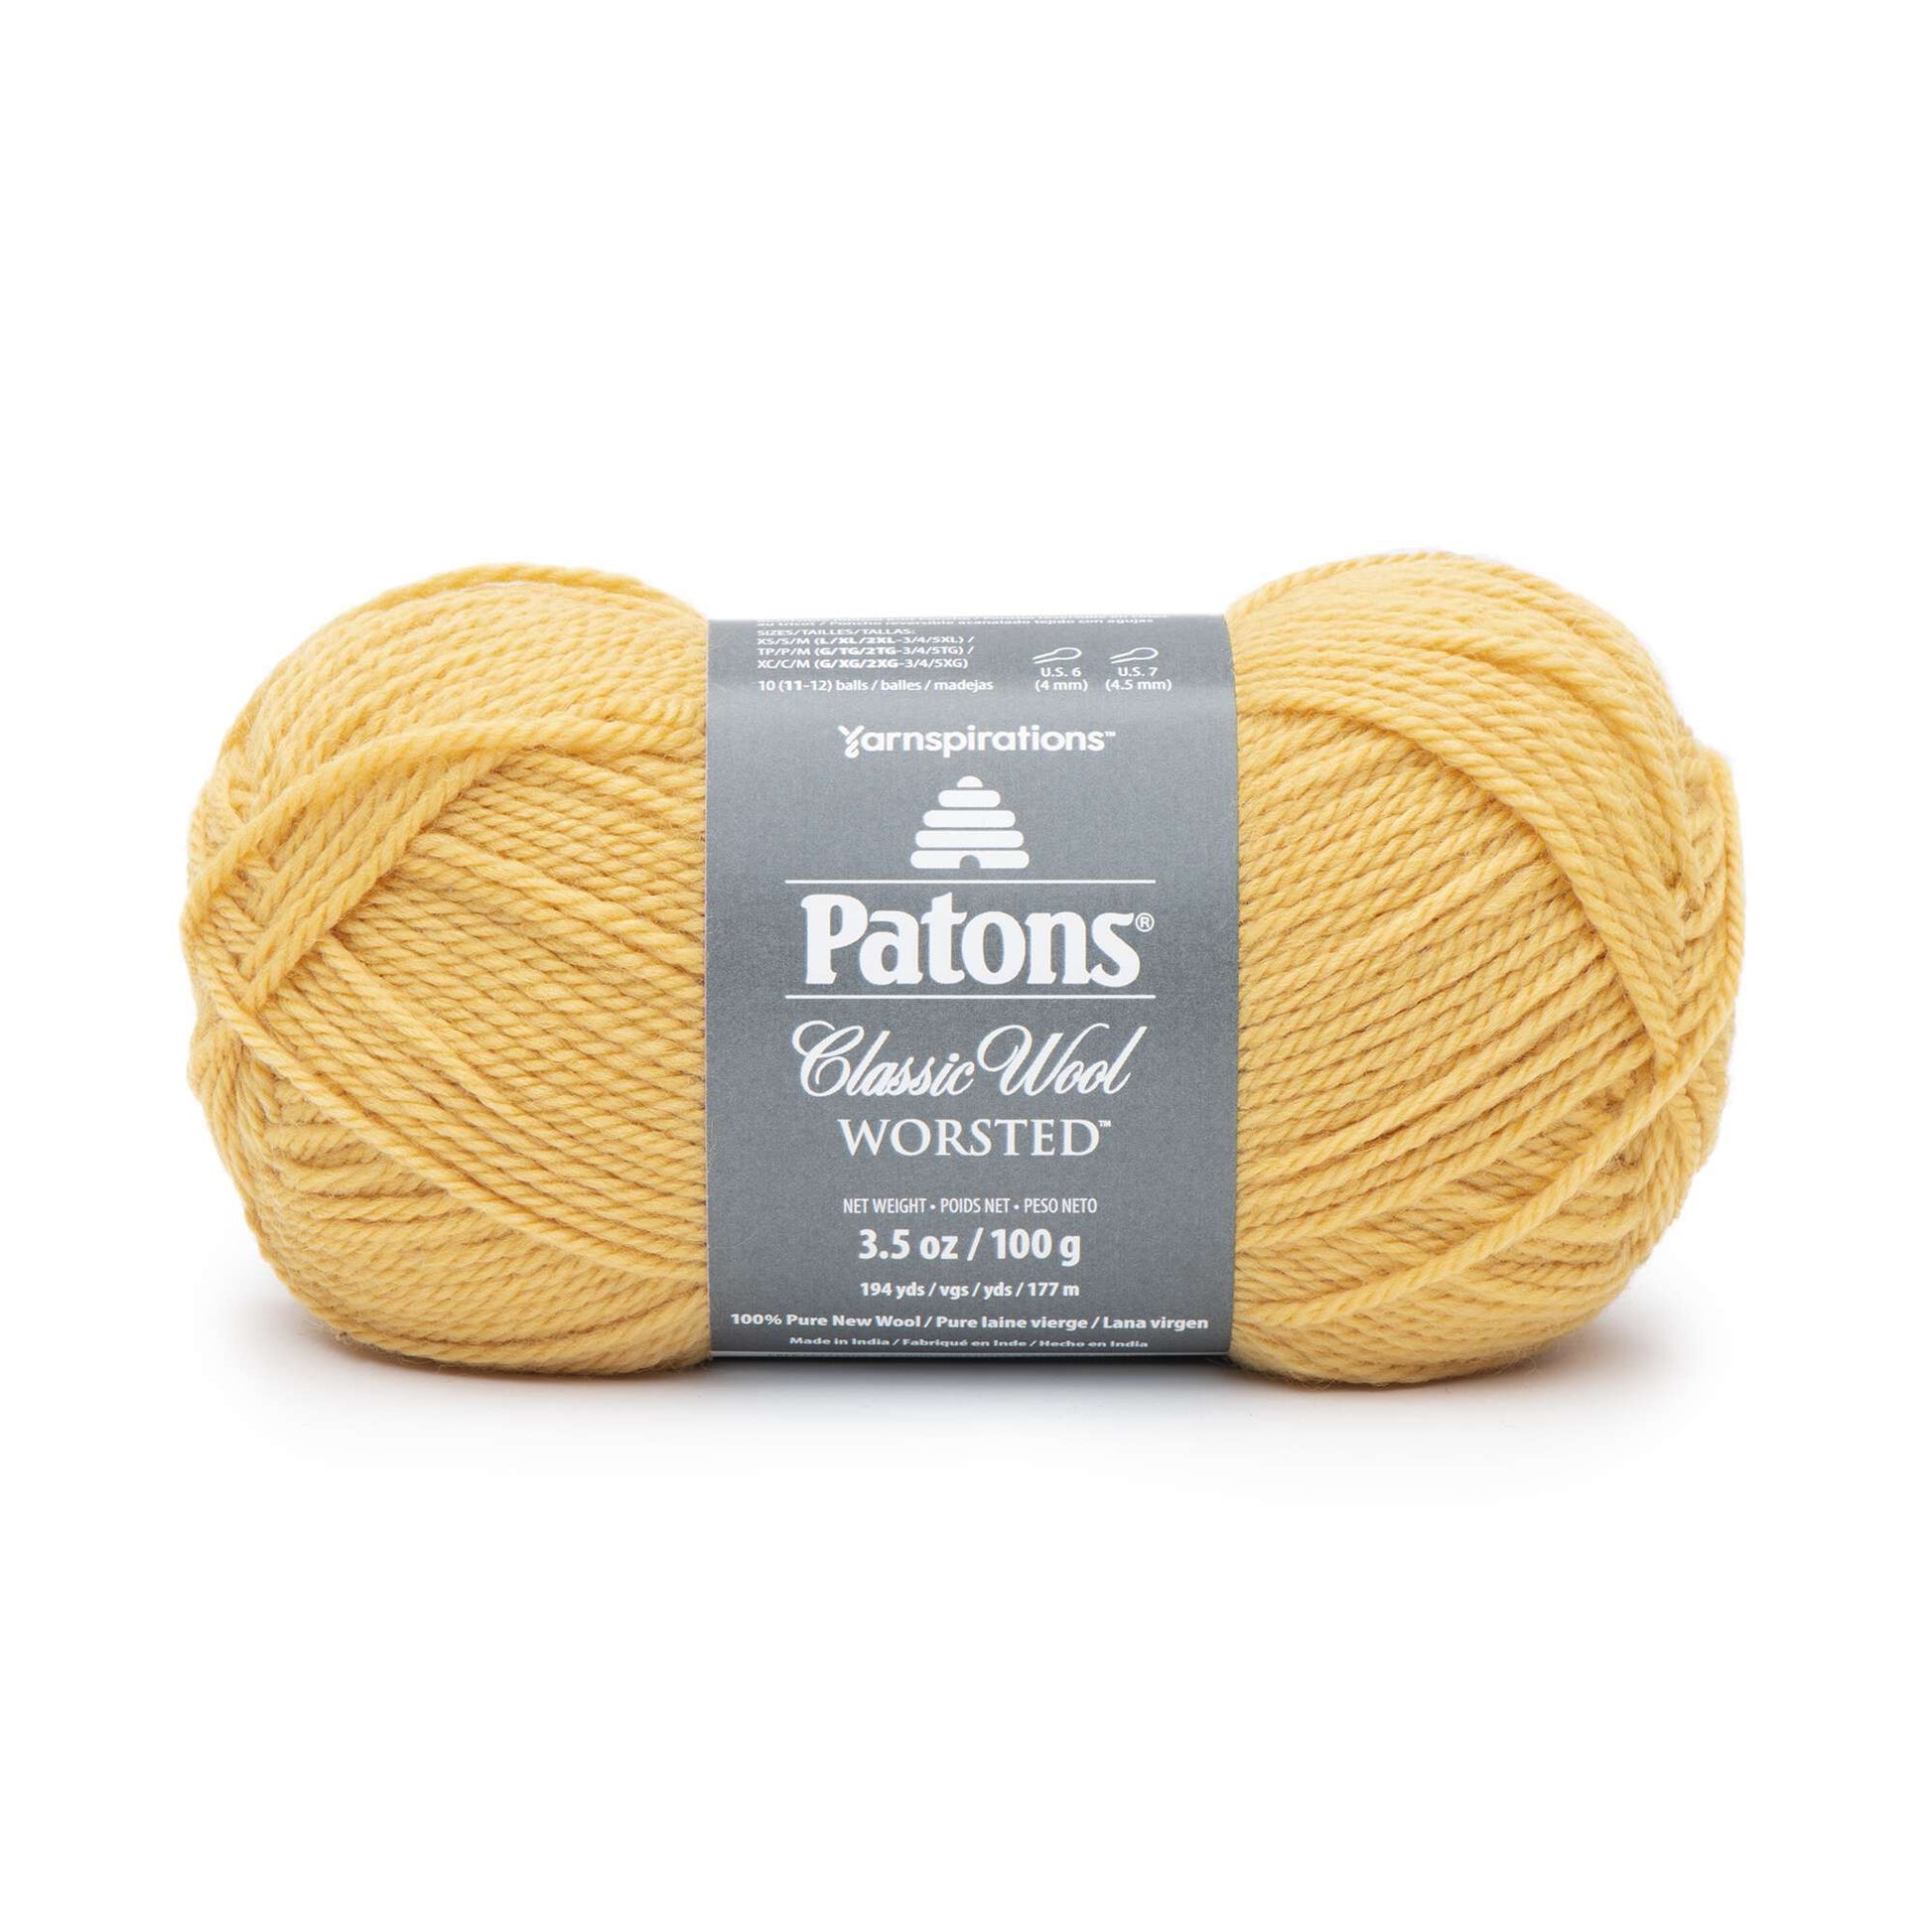 Wool yarn,100% natural, knitting - crochet - craft supplies, dark green